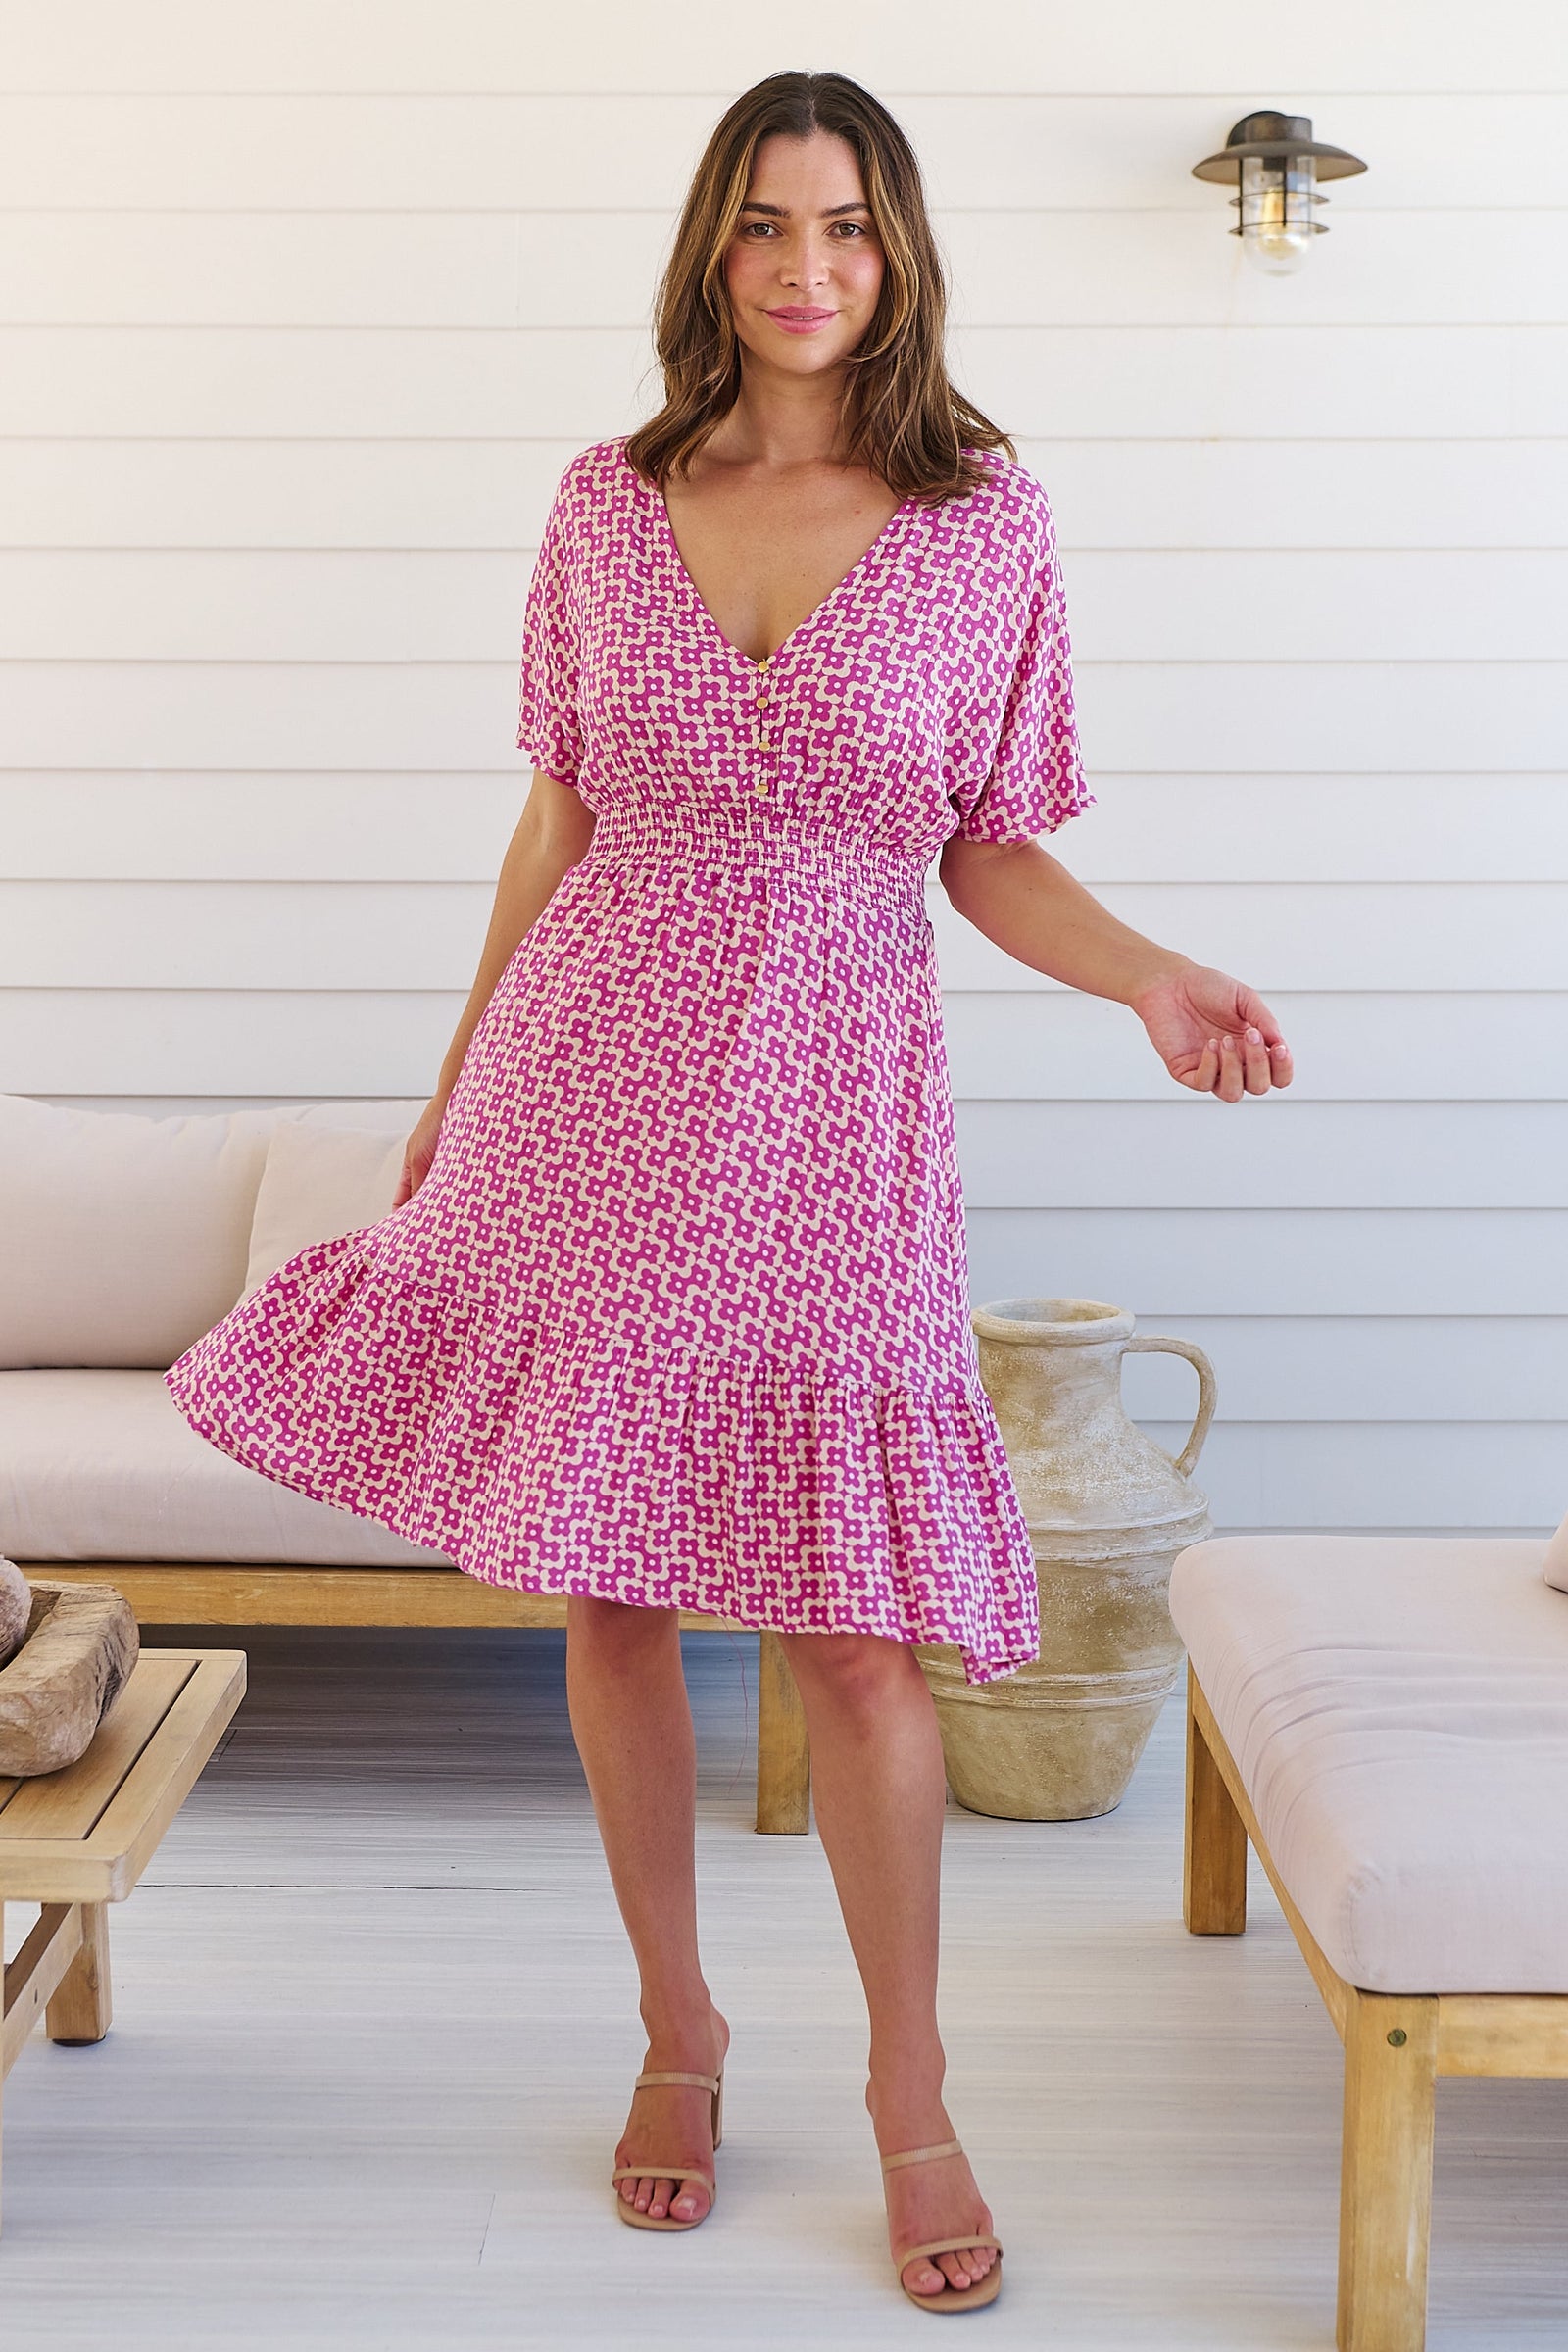 Chiara Cap Sleeve Pink Retro Print Button Front Dress